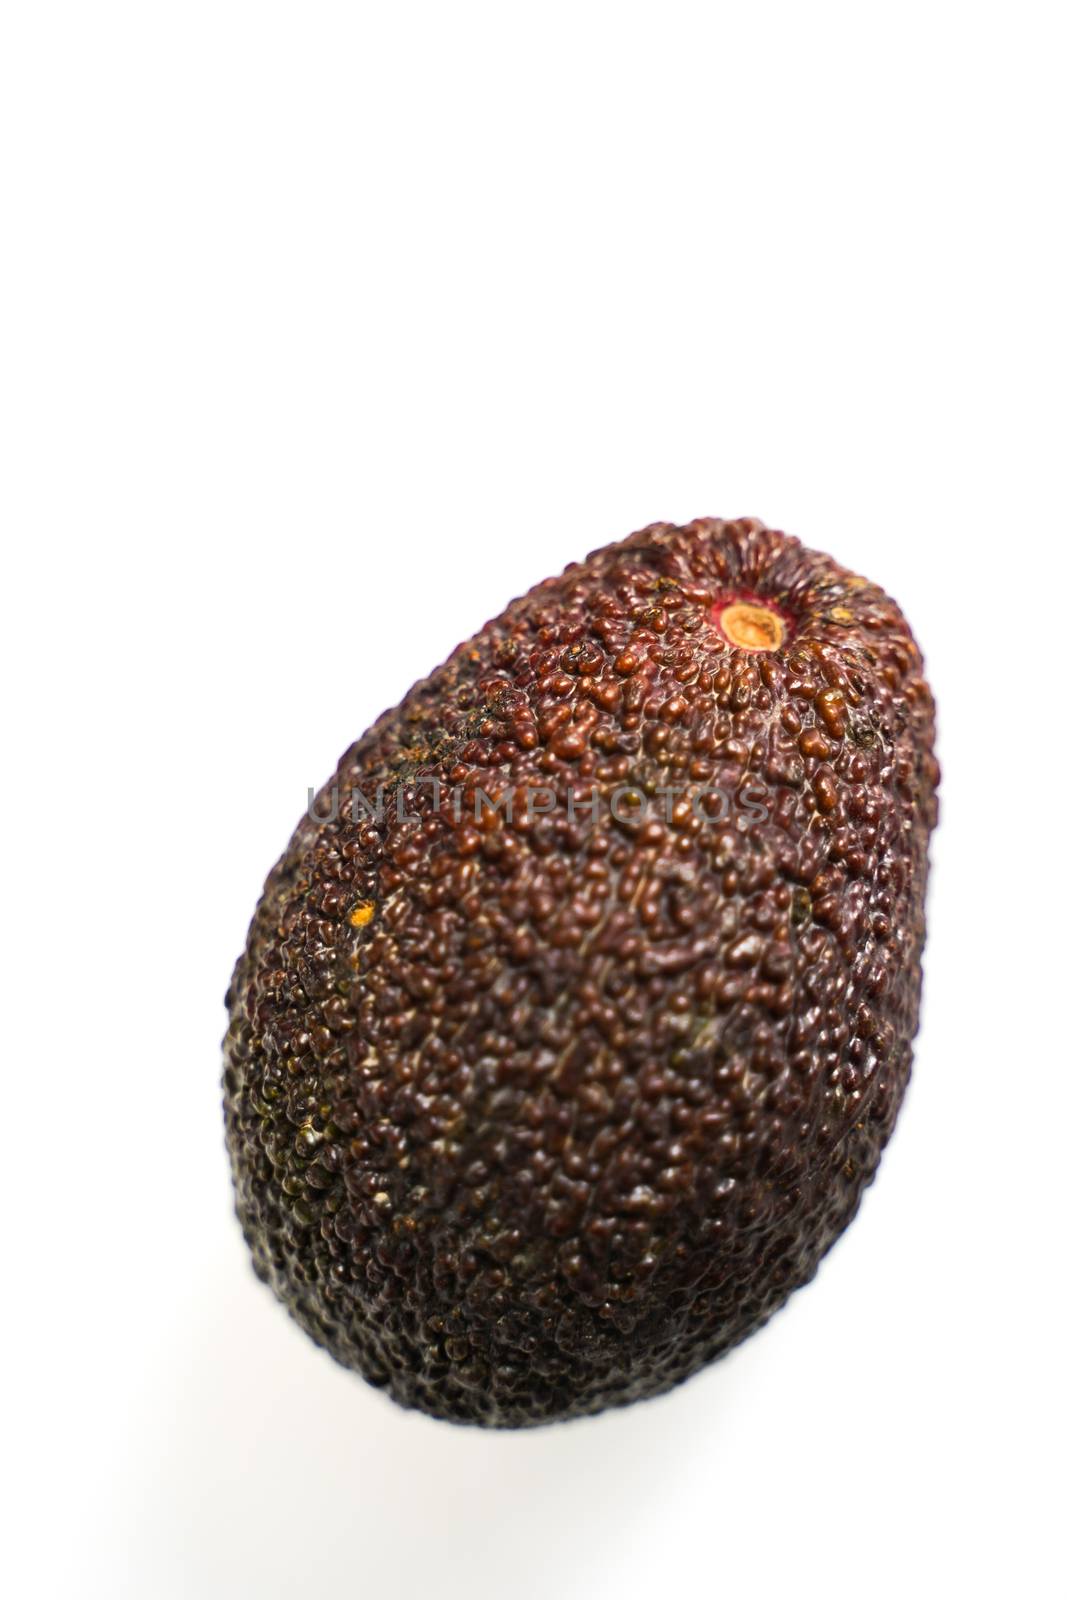 A whole avocado against a plain white background